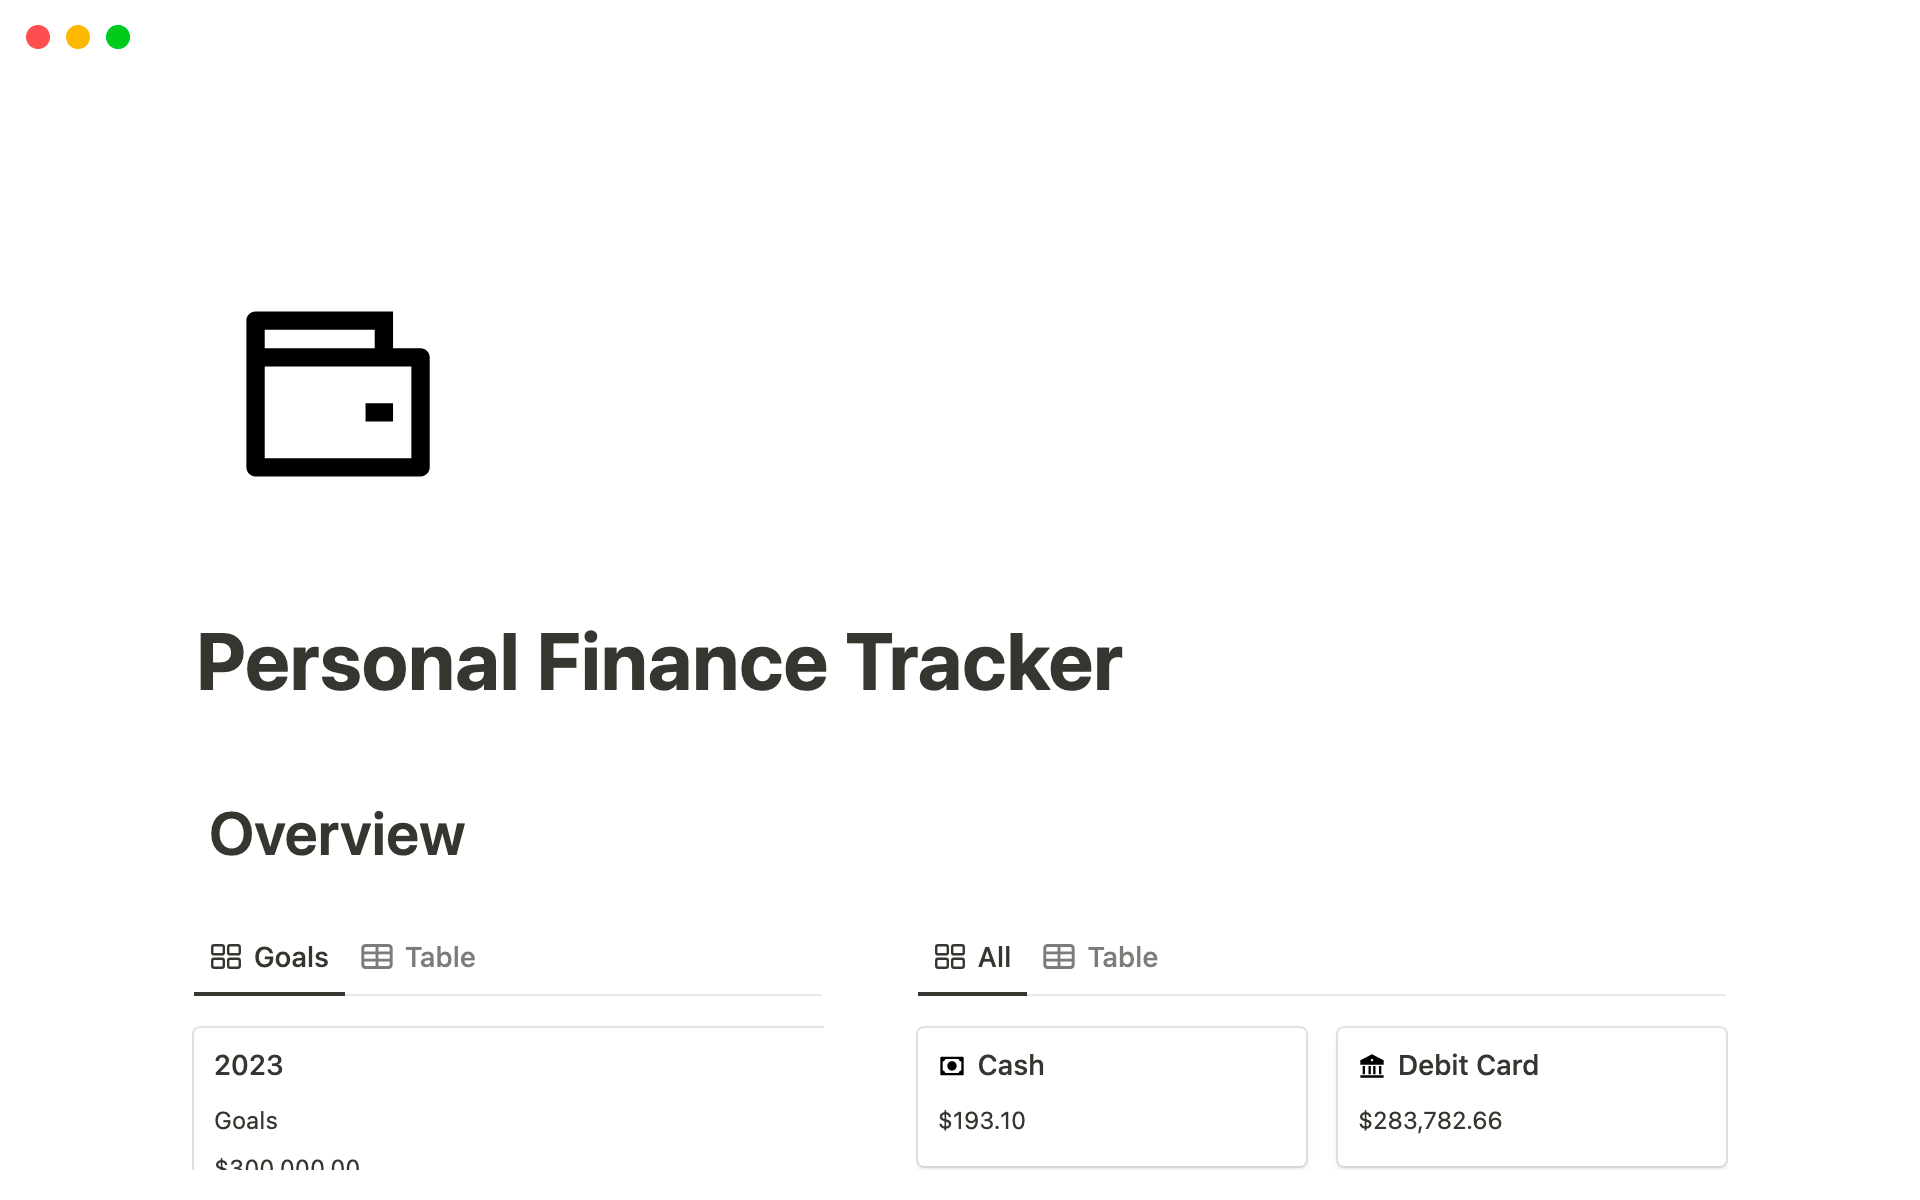 Vista previa de una plantilla para Personal Finance Tracker